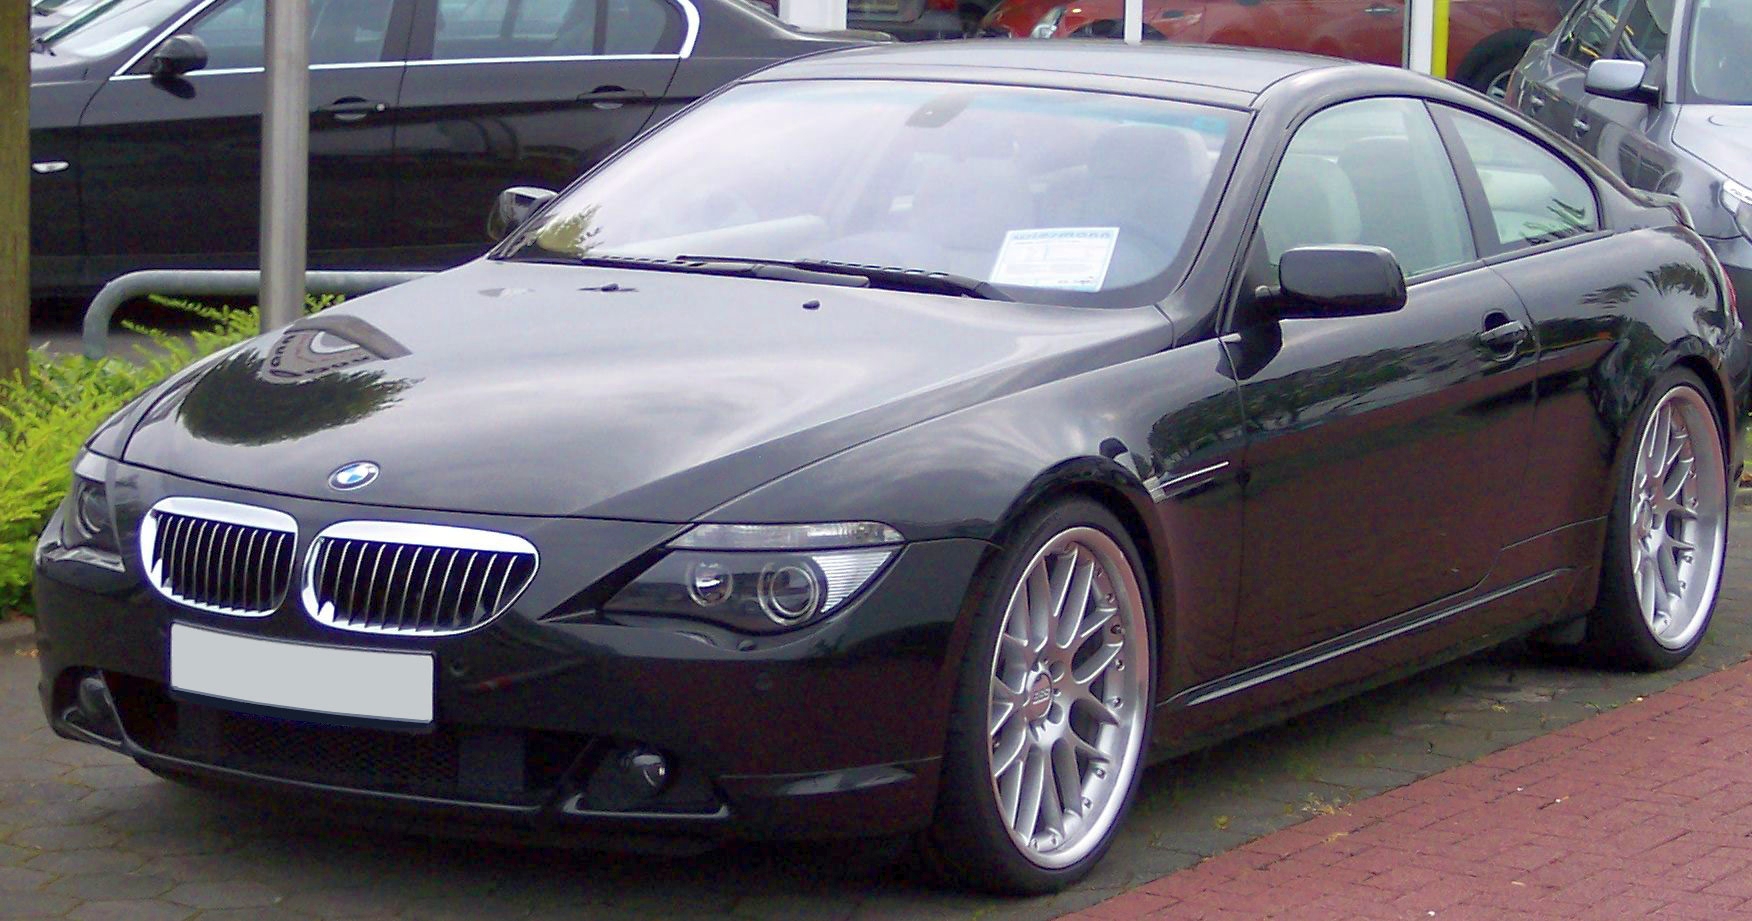 Dossier: BMW Series6 noir vl.jpg